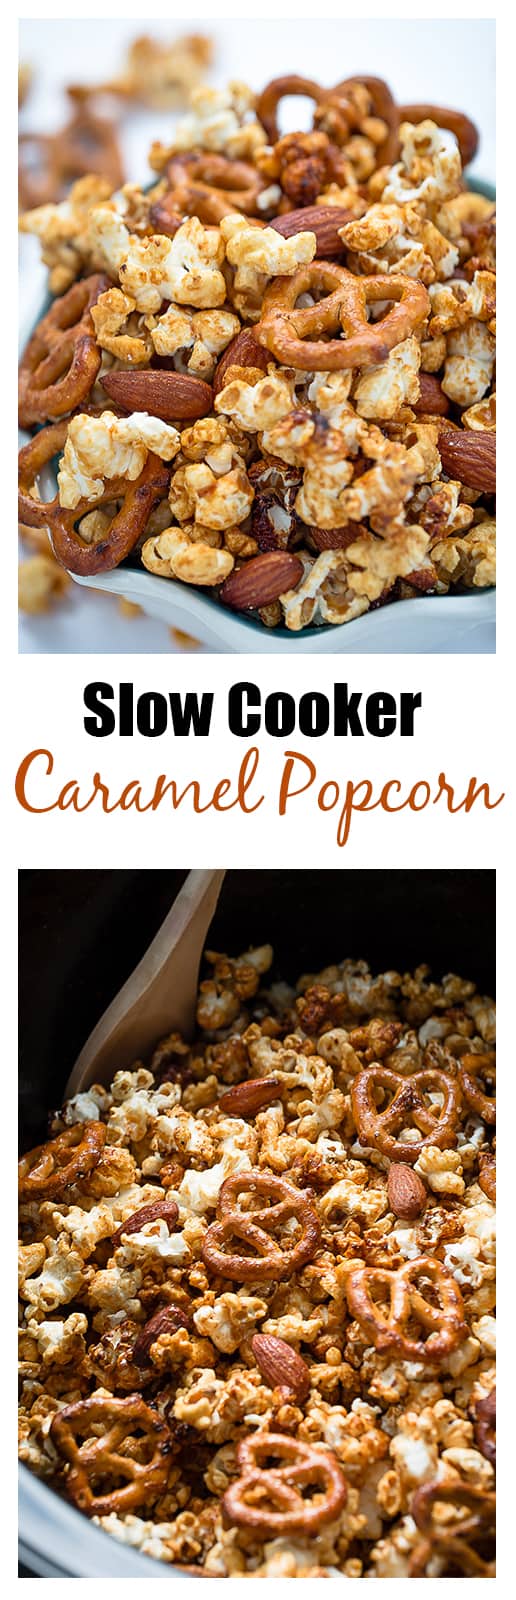 Slow Cooker Caramel Popcorn